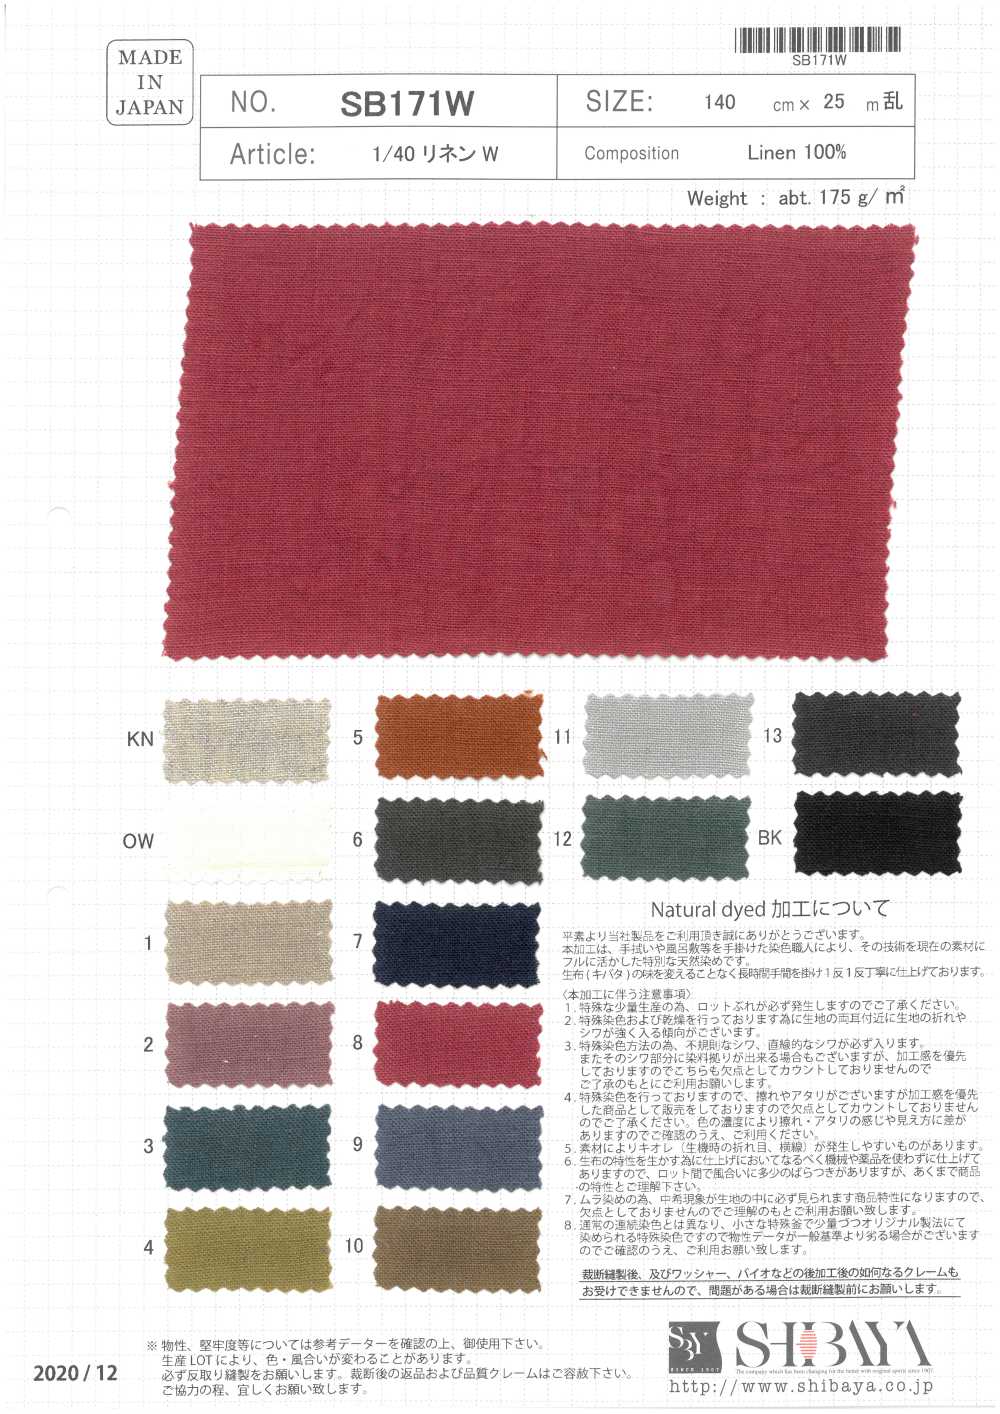 SB171W 1/40 Linen W[Textile / Fabric] SHIBAYA